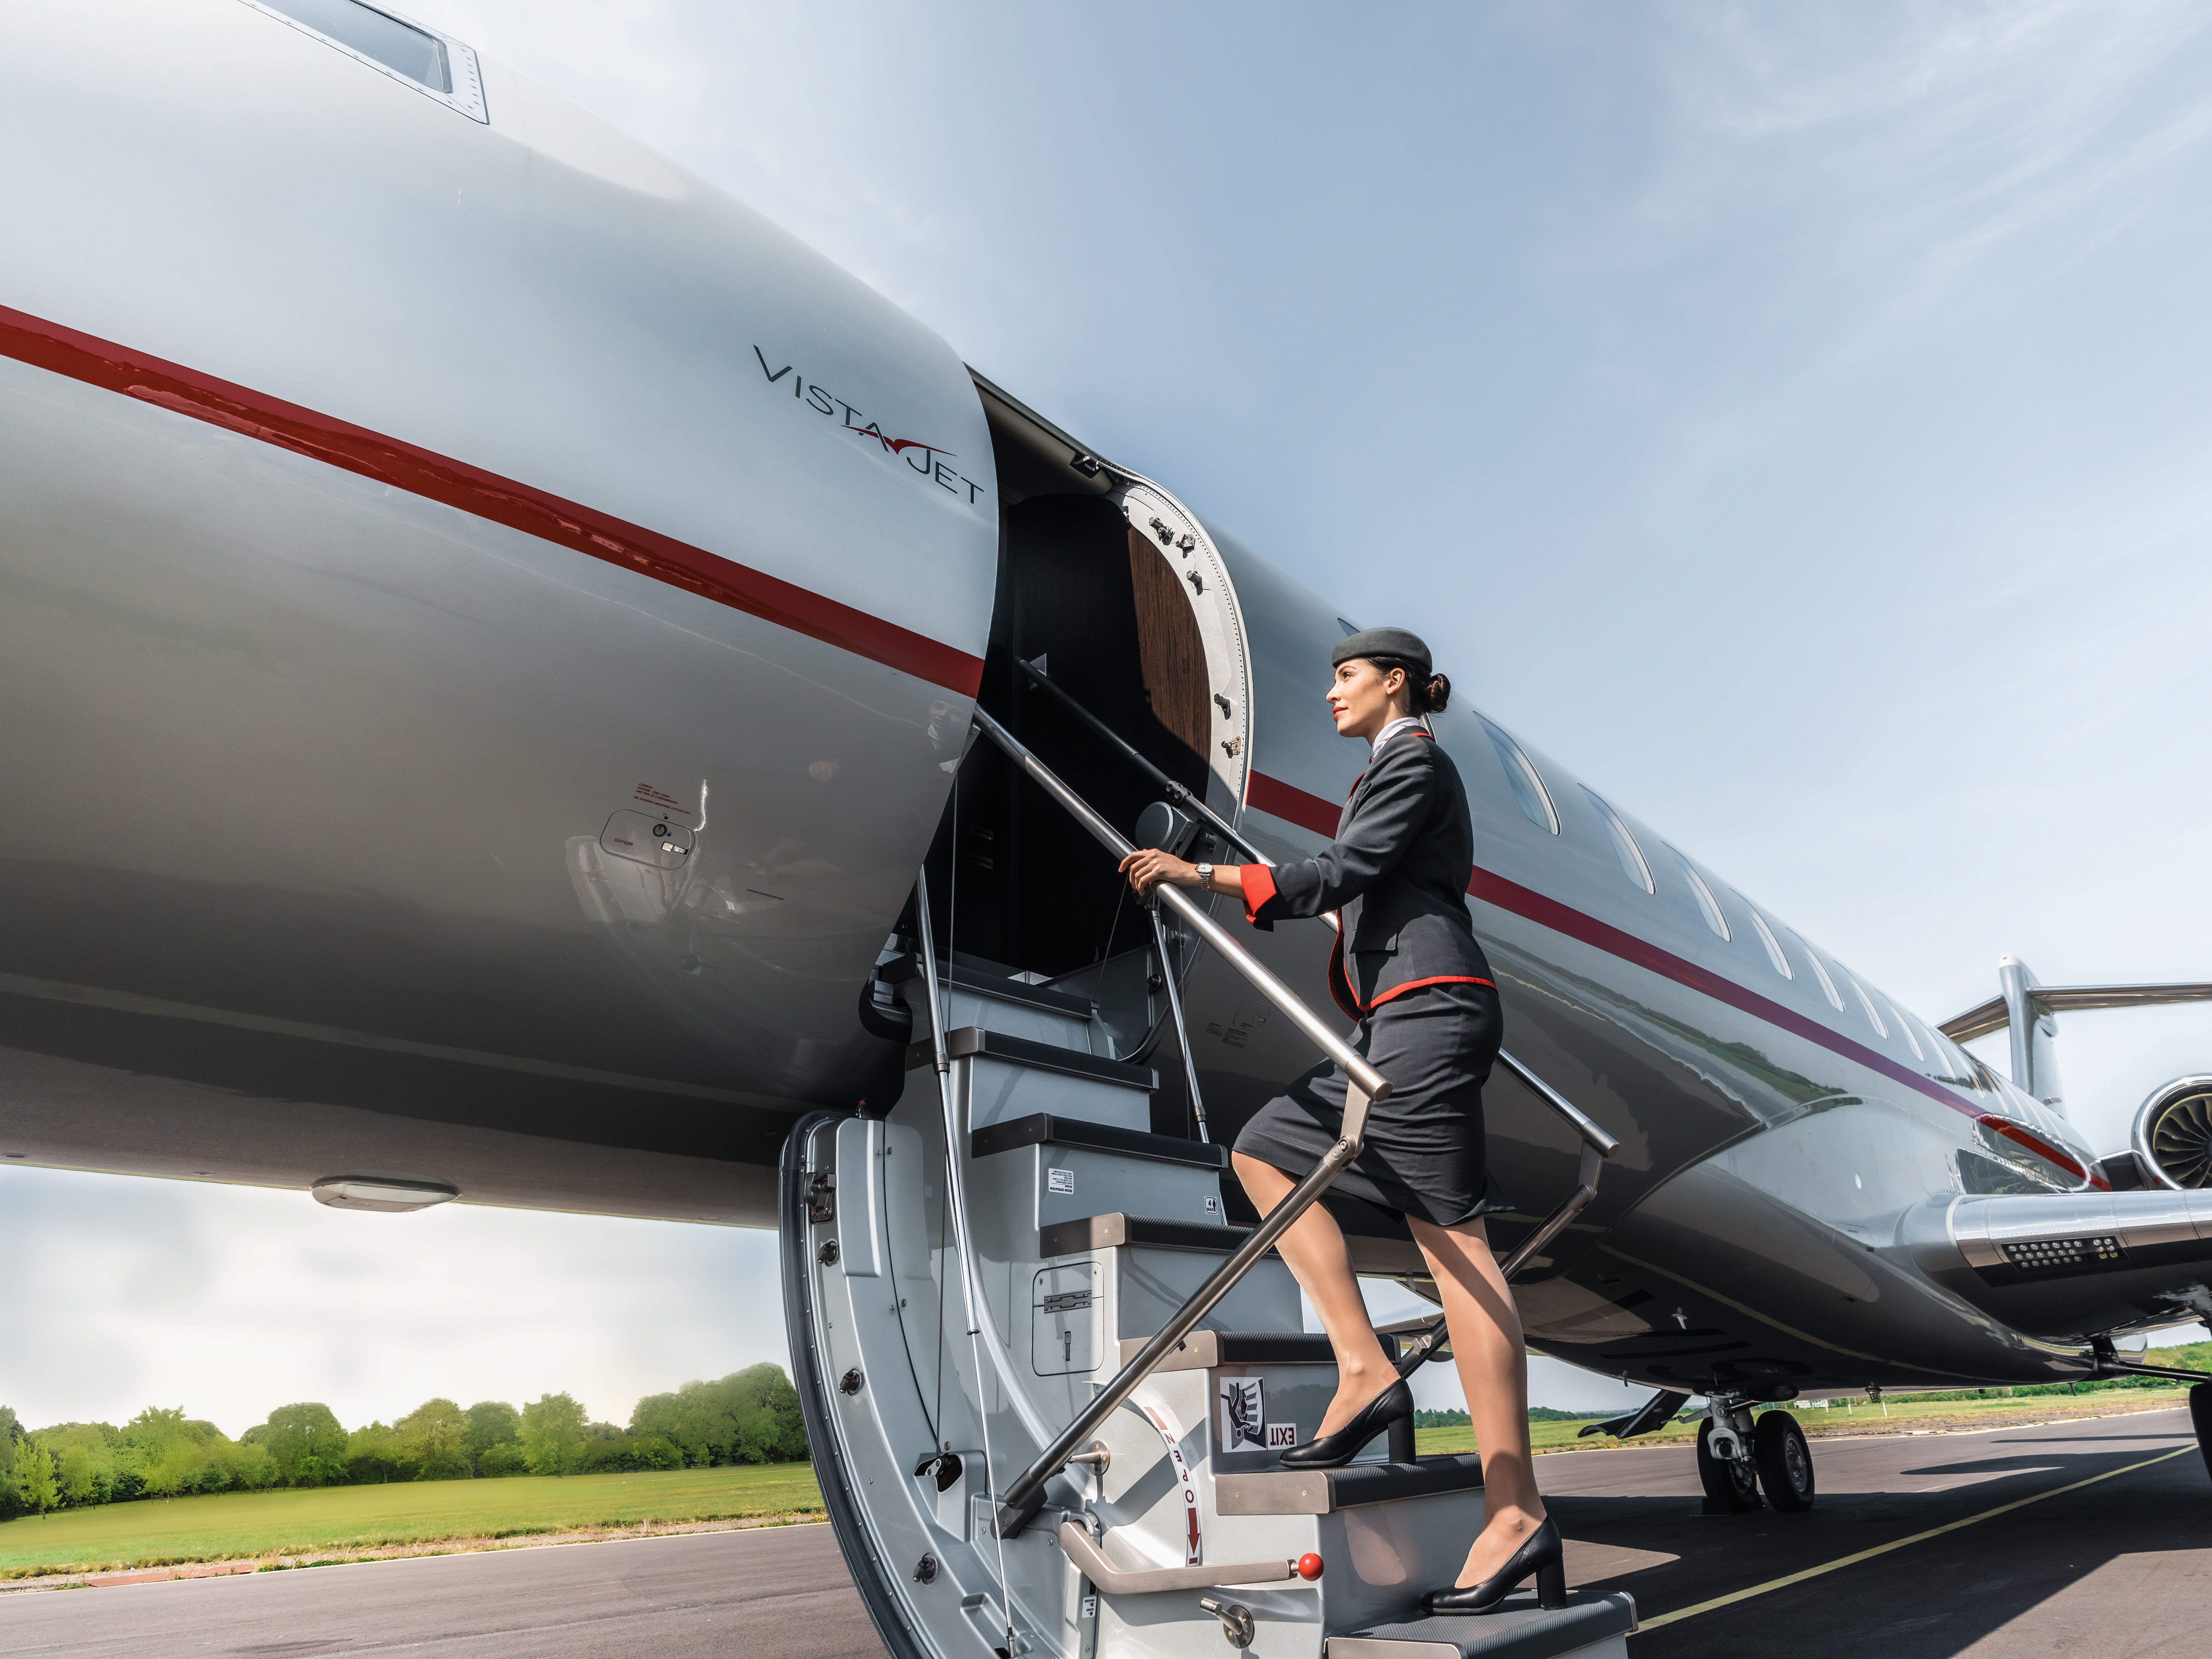 A vistajet cabin hostess boarding a private jet.